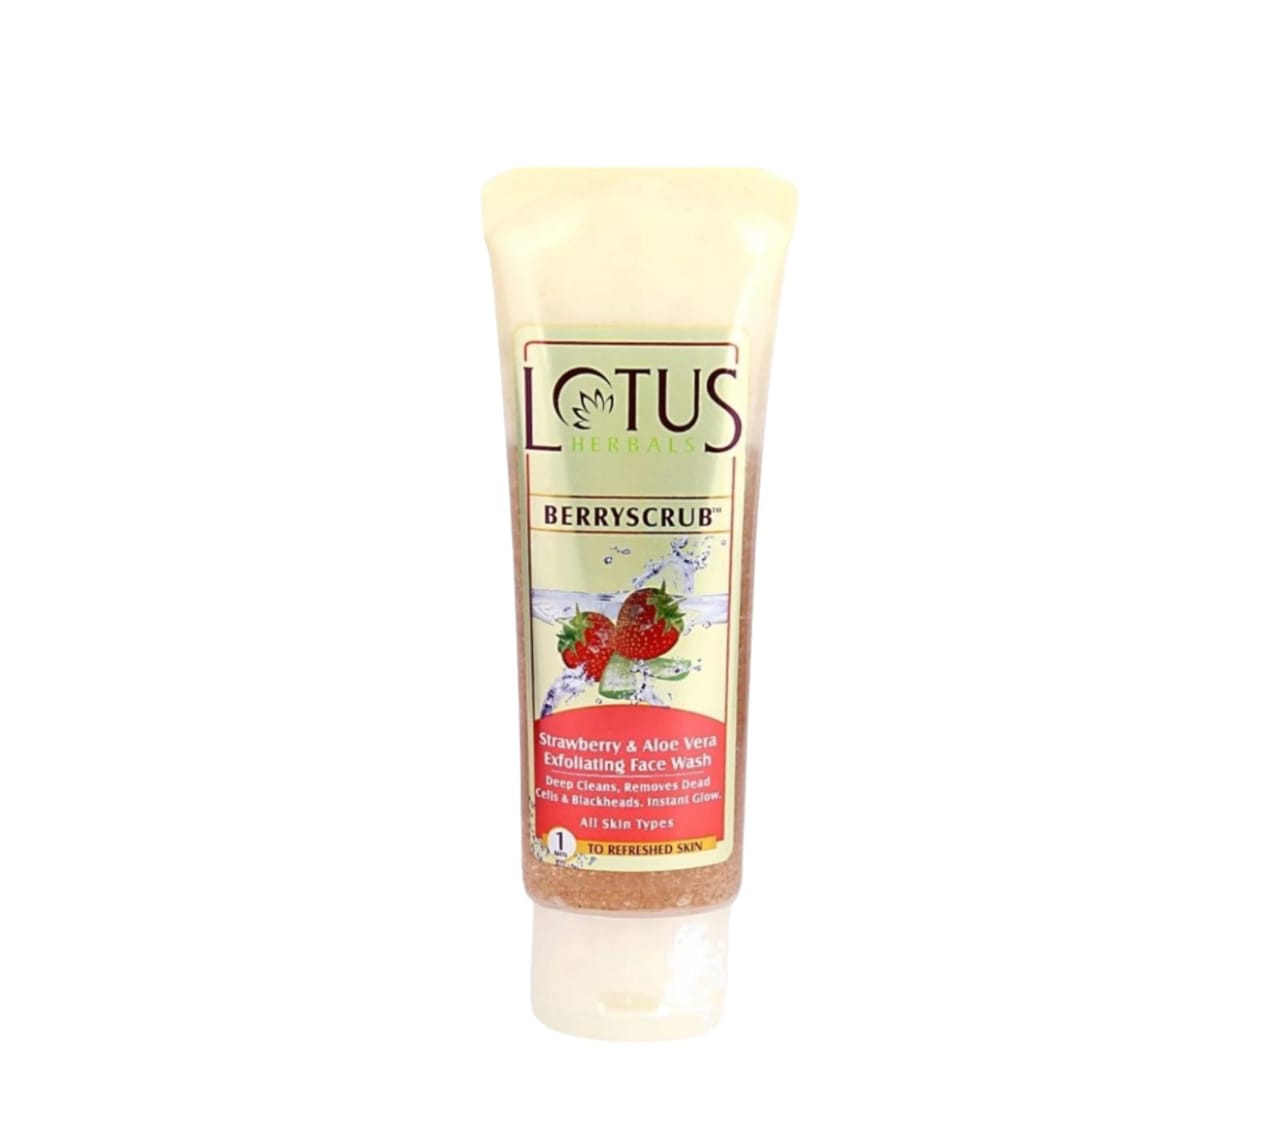 Lotus Berry Scrub Strawberry And Aloe Vera Exfoliating Face Wash